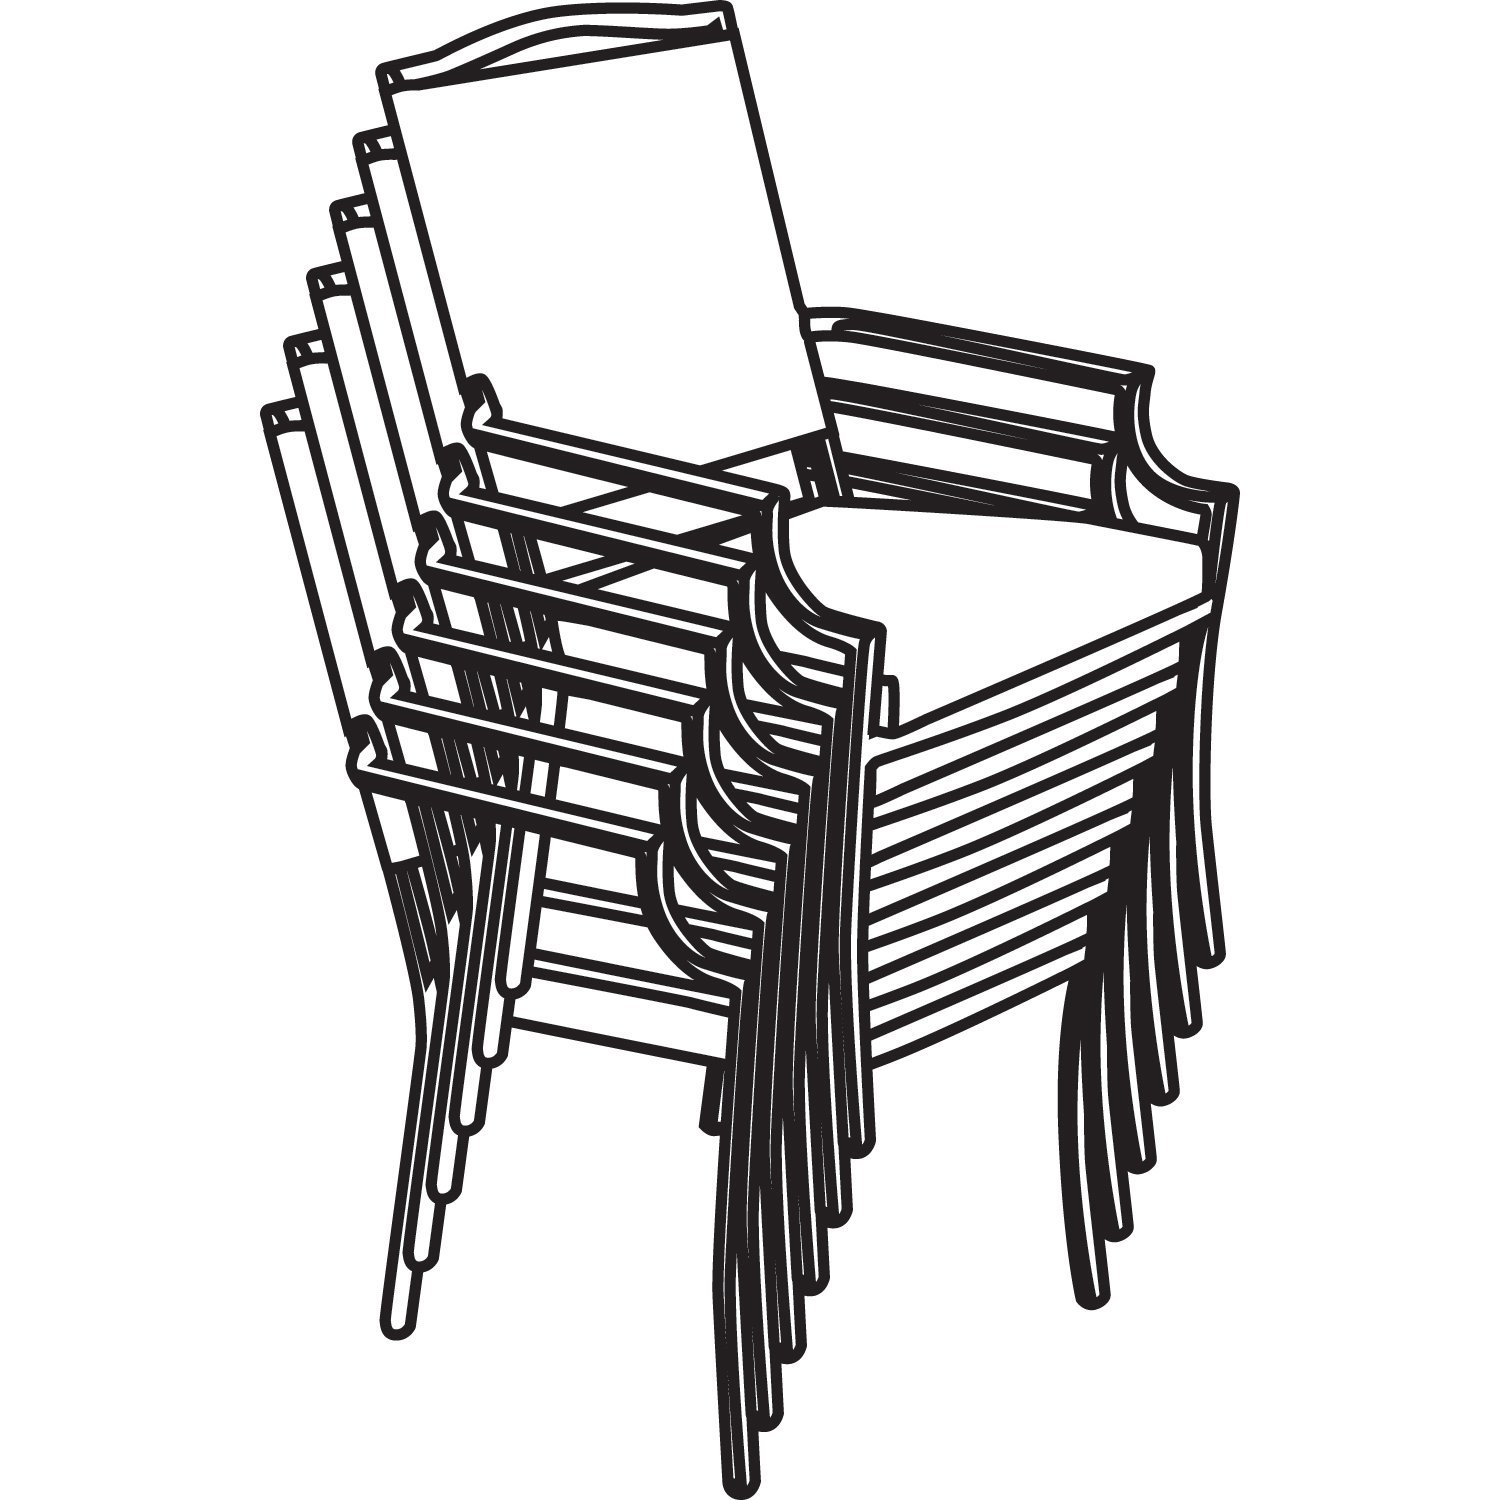 Adirondack Chair Drawing